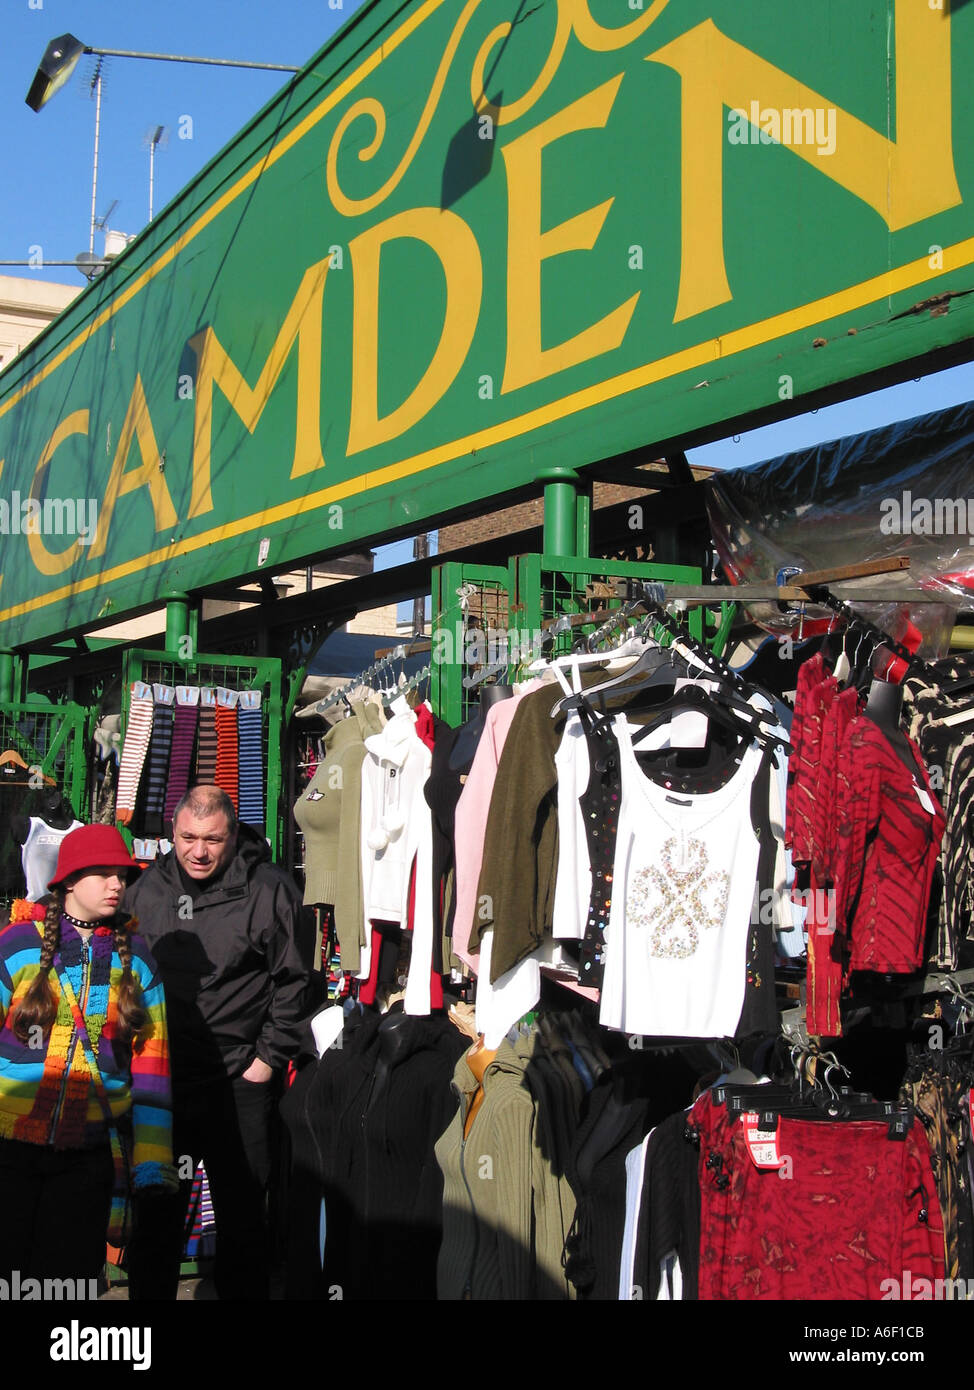 Camden Market, Chalk Farm Road, near Camden Lock, Camden Town, London, England, United Kingdome Stock Photo